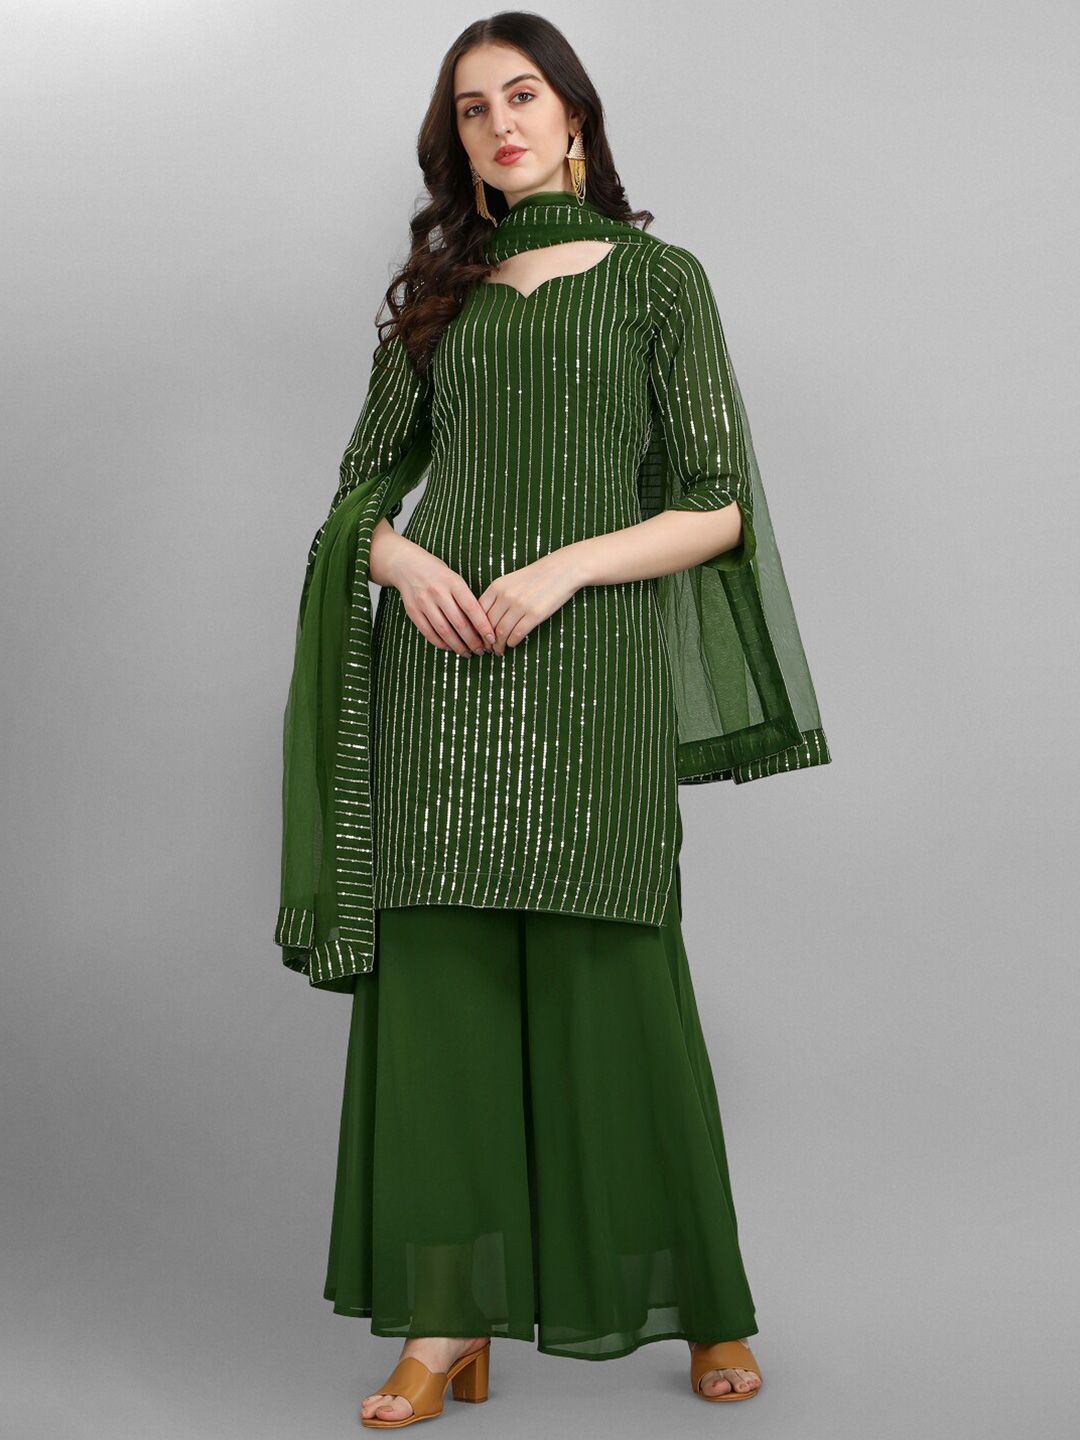 JATRIQQ Green Embroidered Silk Georgette Semi-Stitched Dress Material Price in India